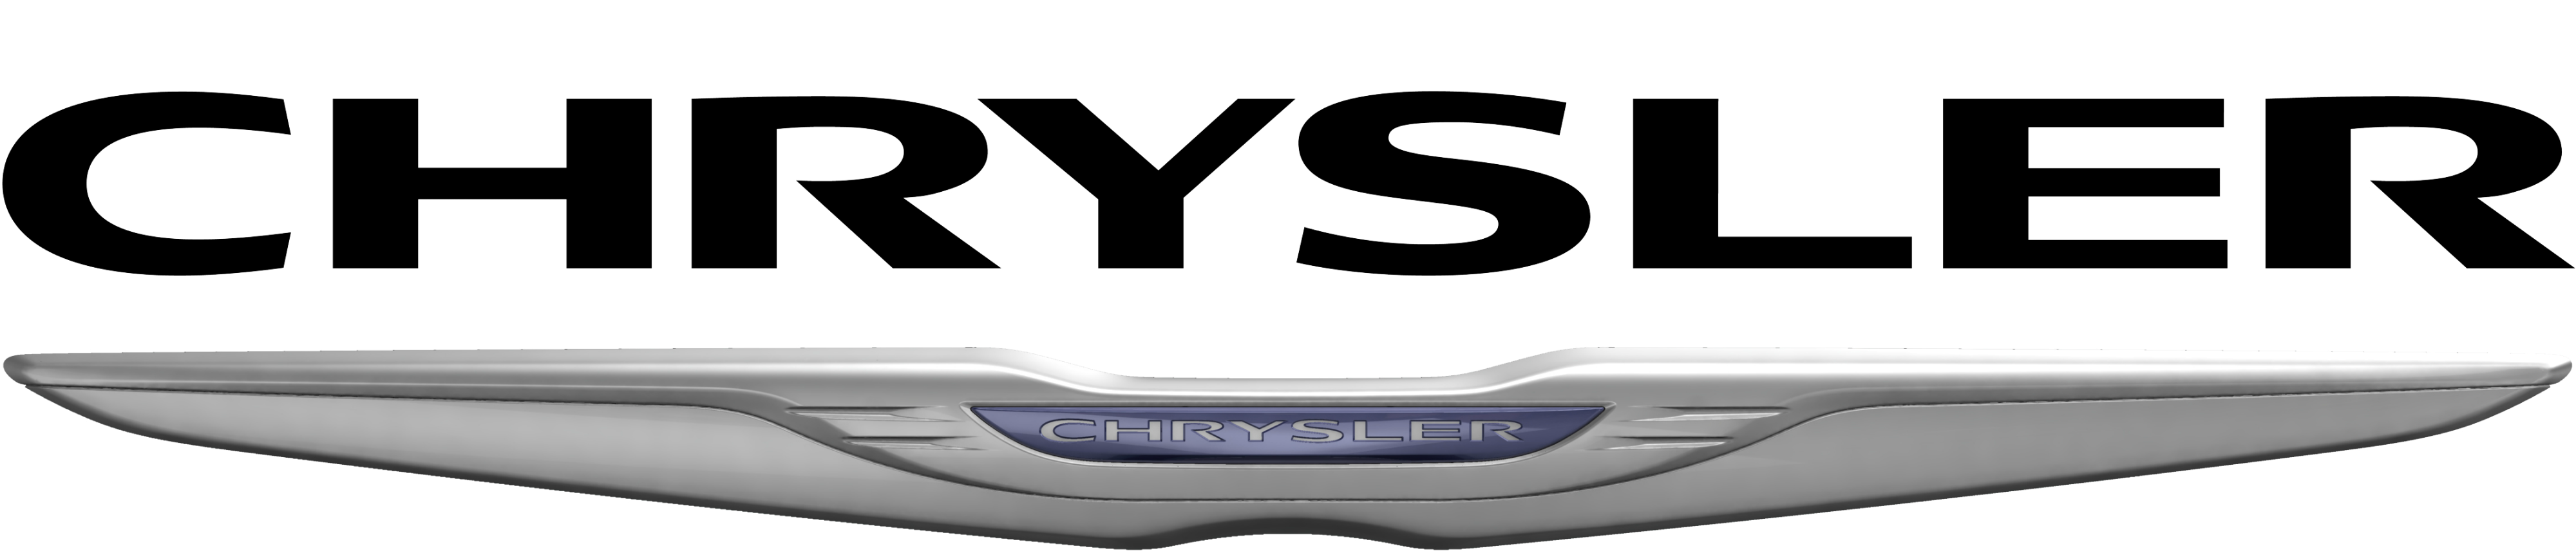 Chrysler car logo #4